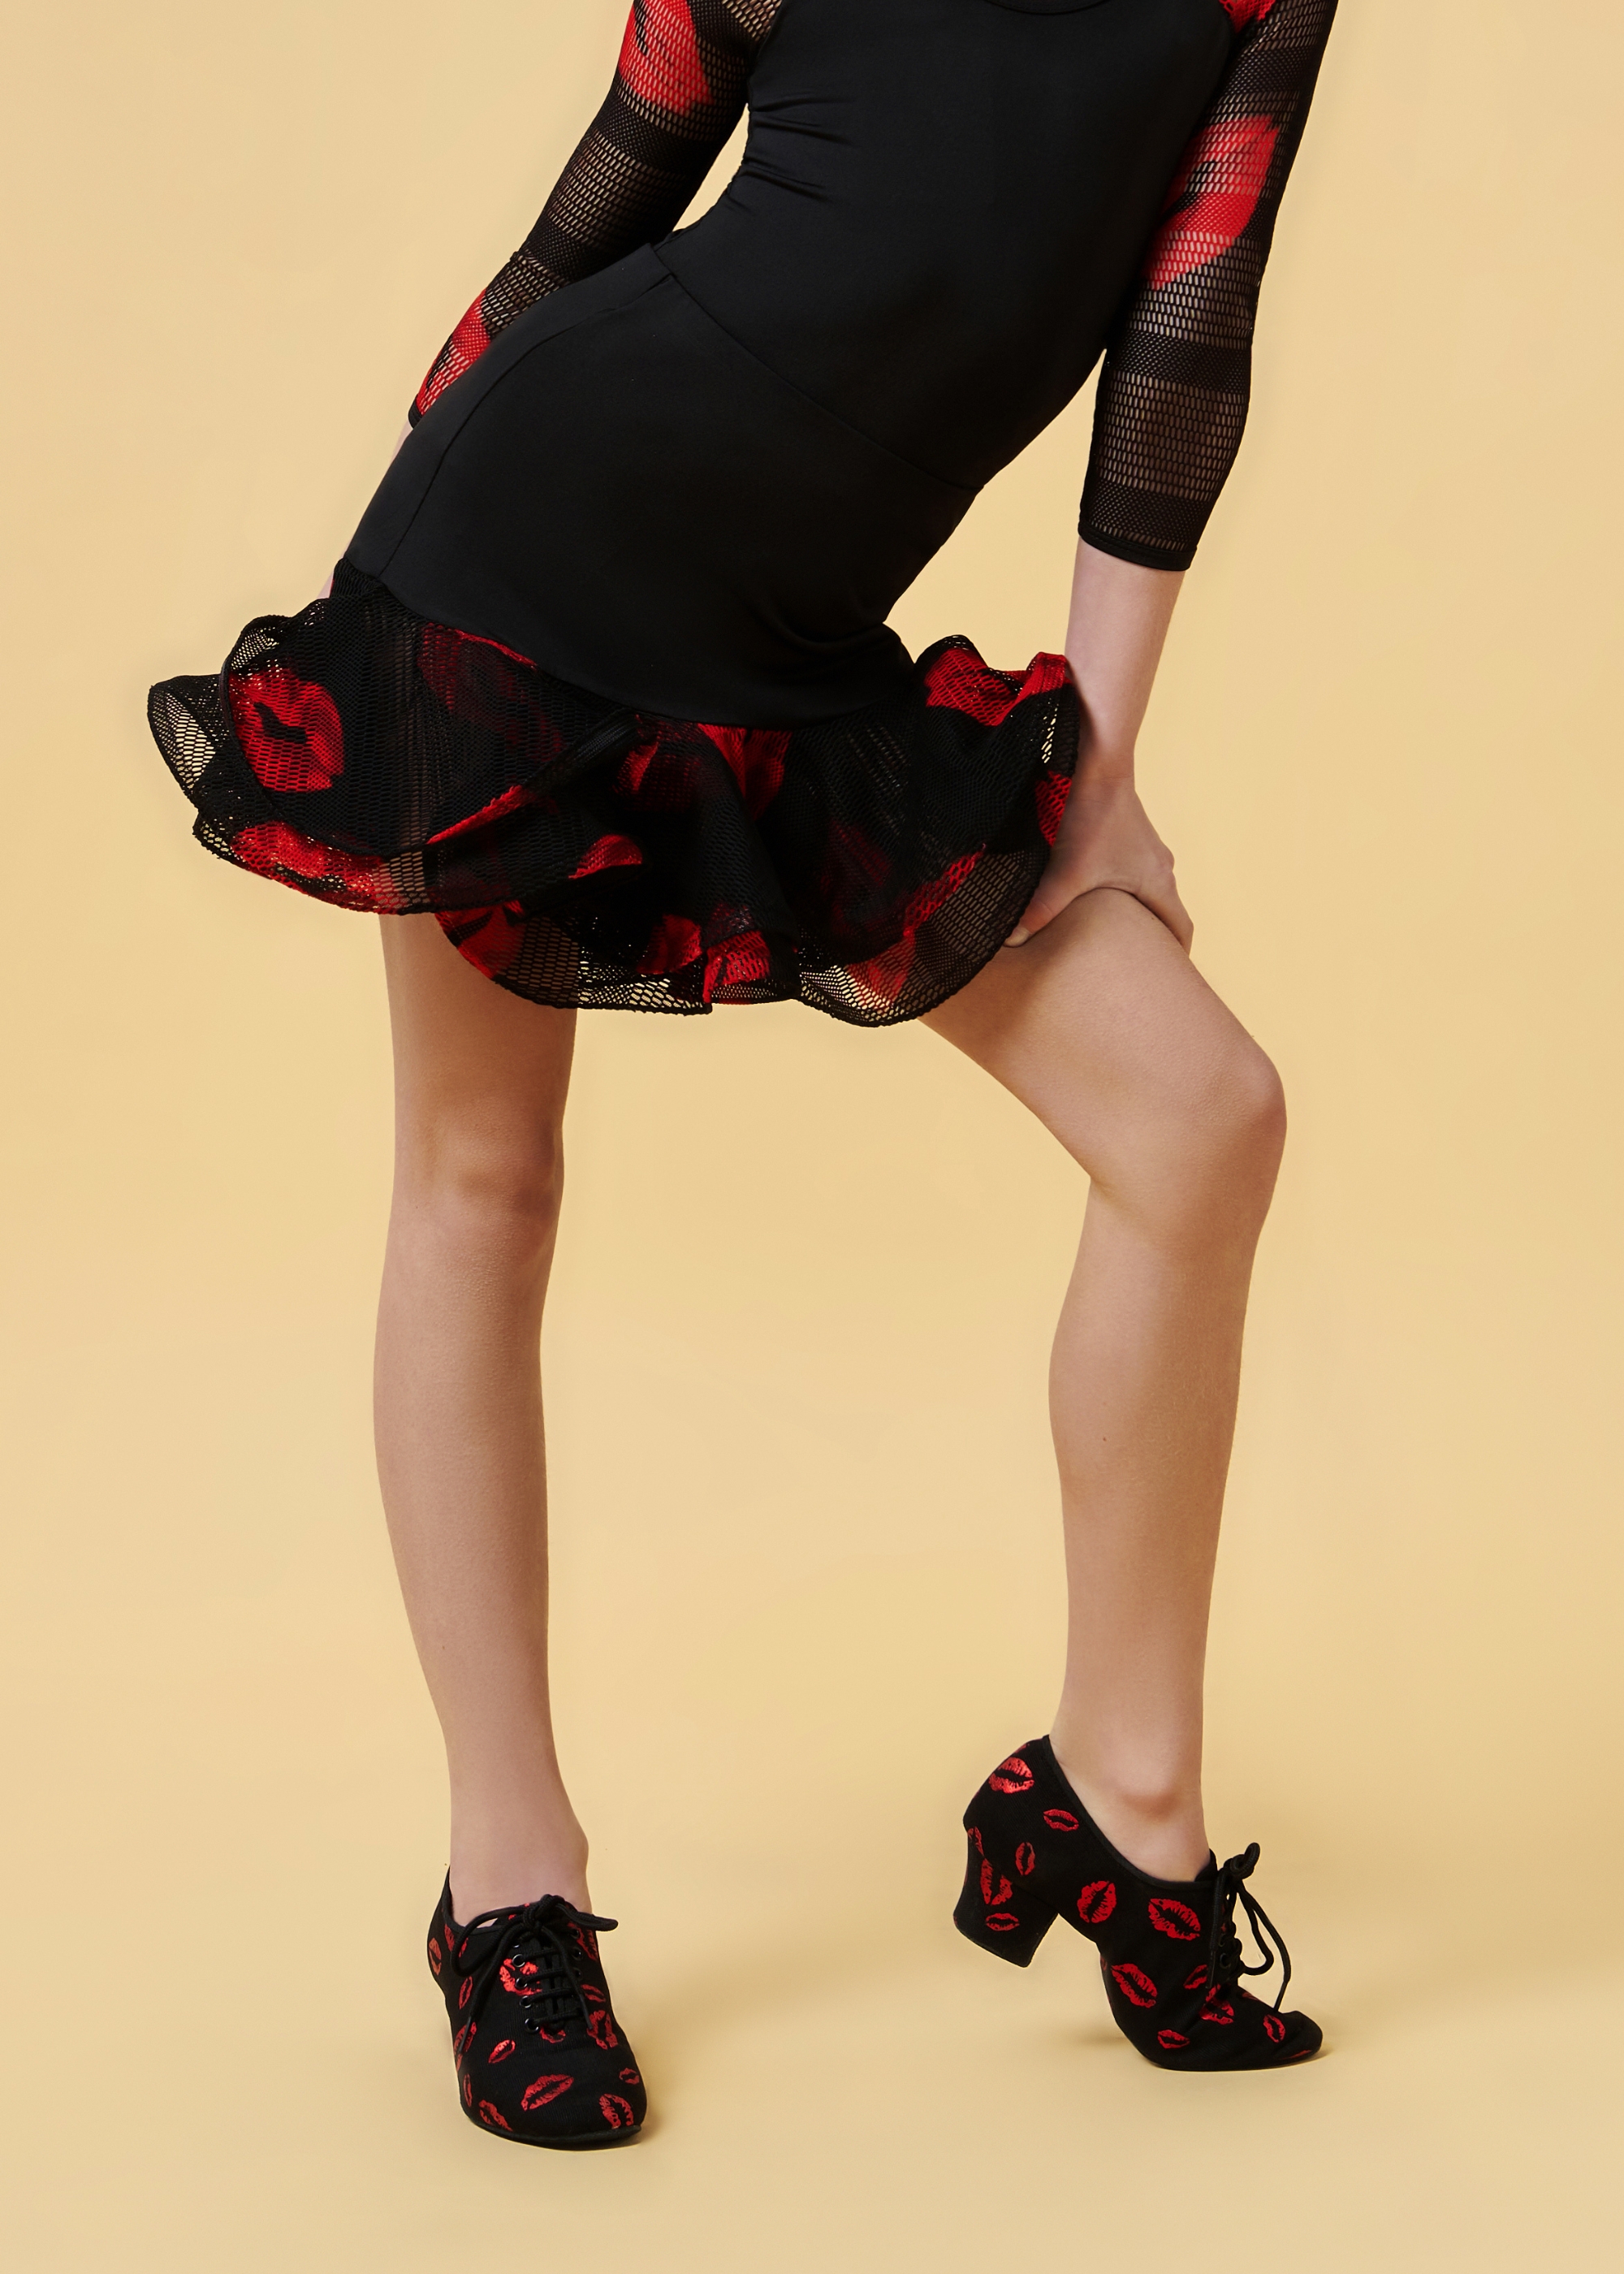 RUBY LIPS latin dance skirt by Grand Prix